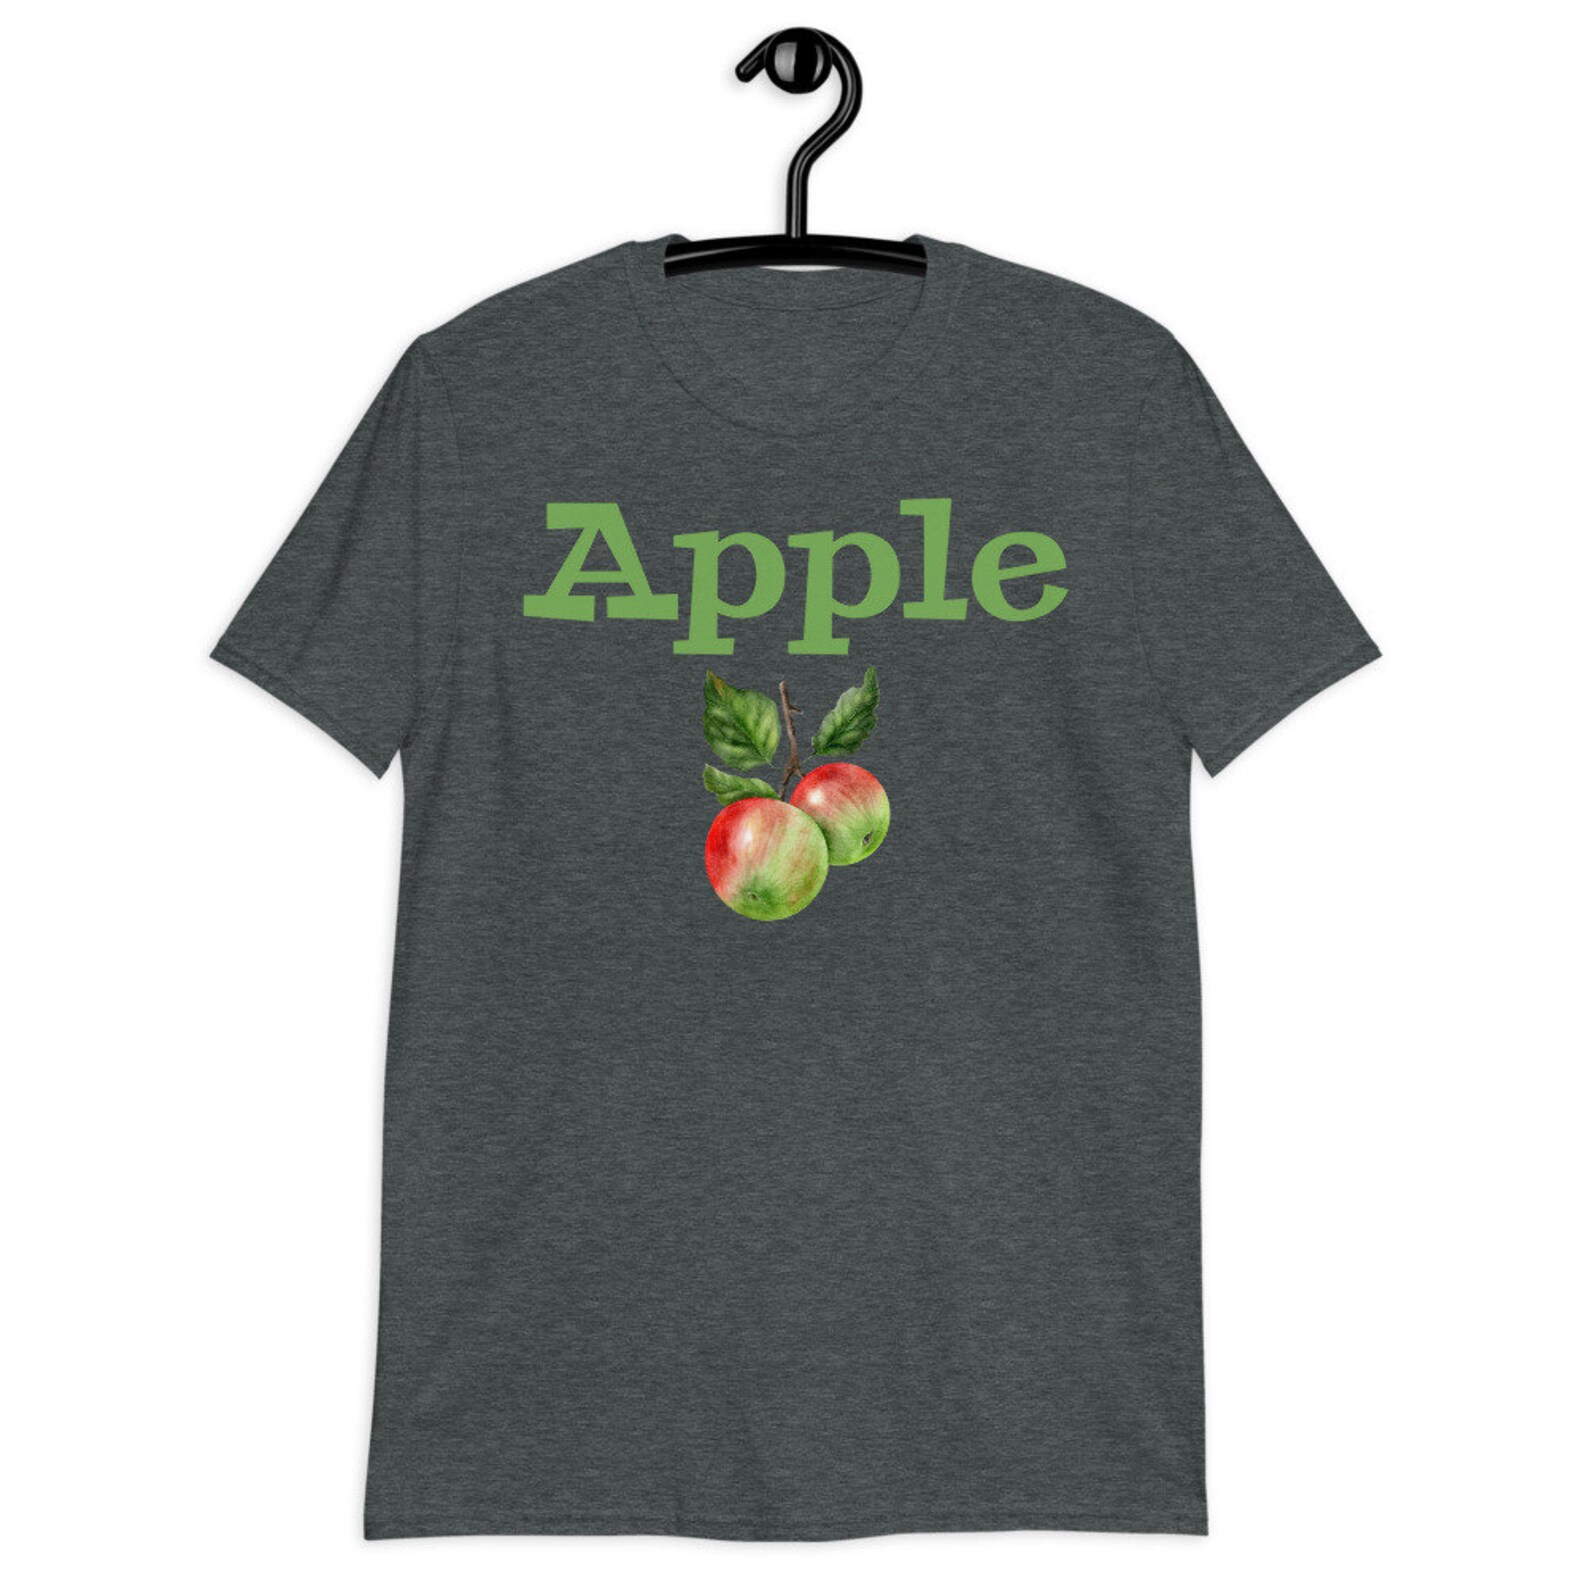 Apple Fruit T-Shirt Food Shirt Garden Shirt Fruit Shirt | Etsy